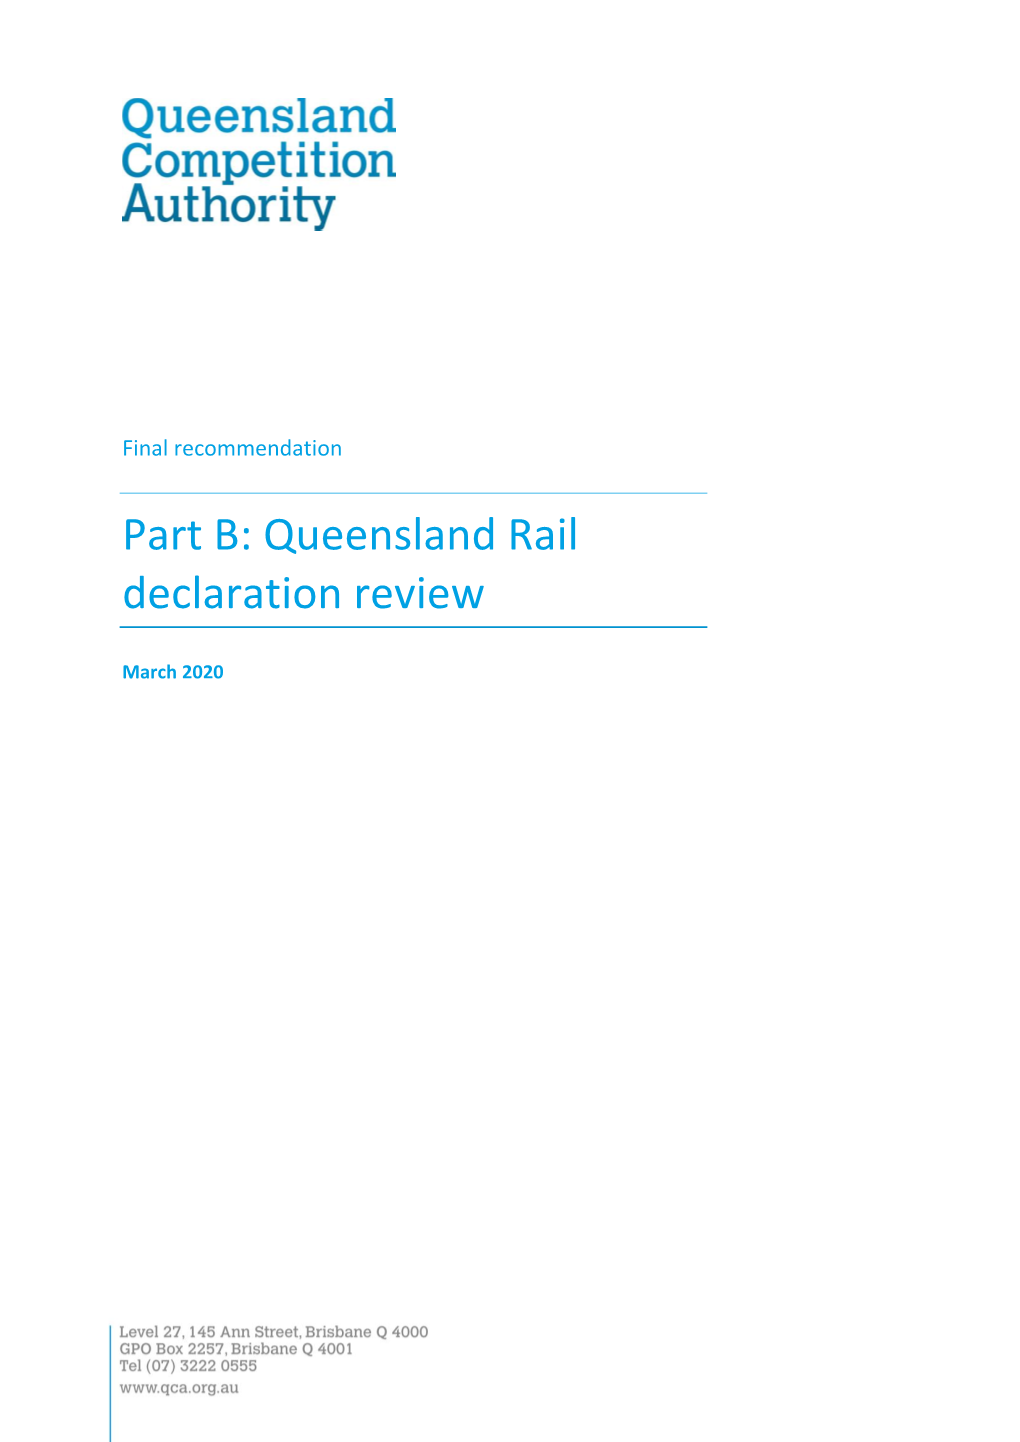 Part B: Queensland Rail Declaration Review